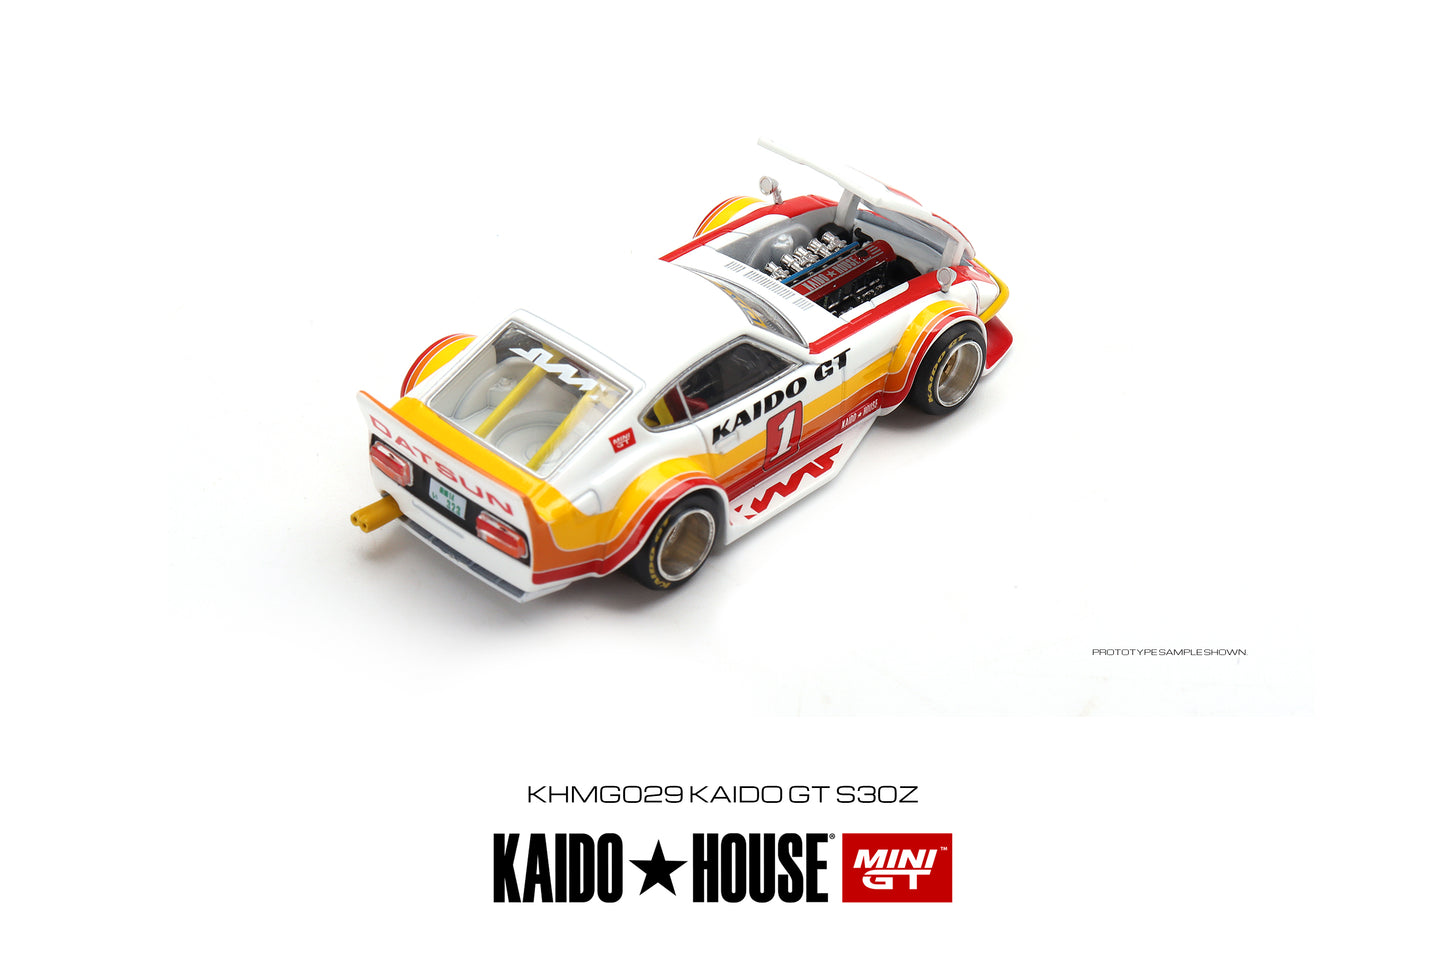 MINI GT X KAIDO HOUSE Datsun KAIDO Fairlady Z Kaido GT V1  - RHD [ KHMG029]